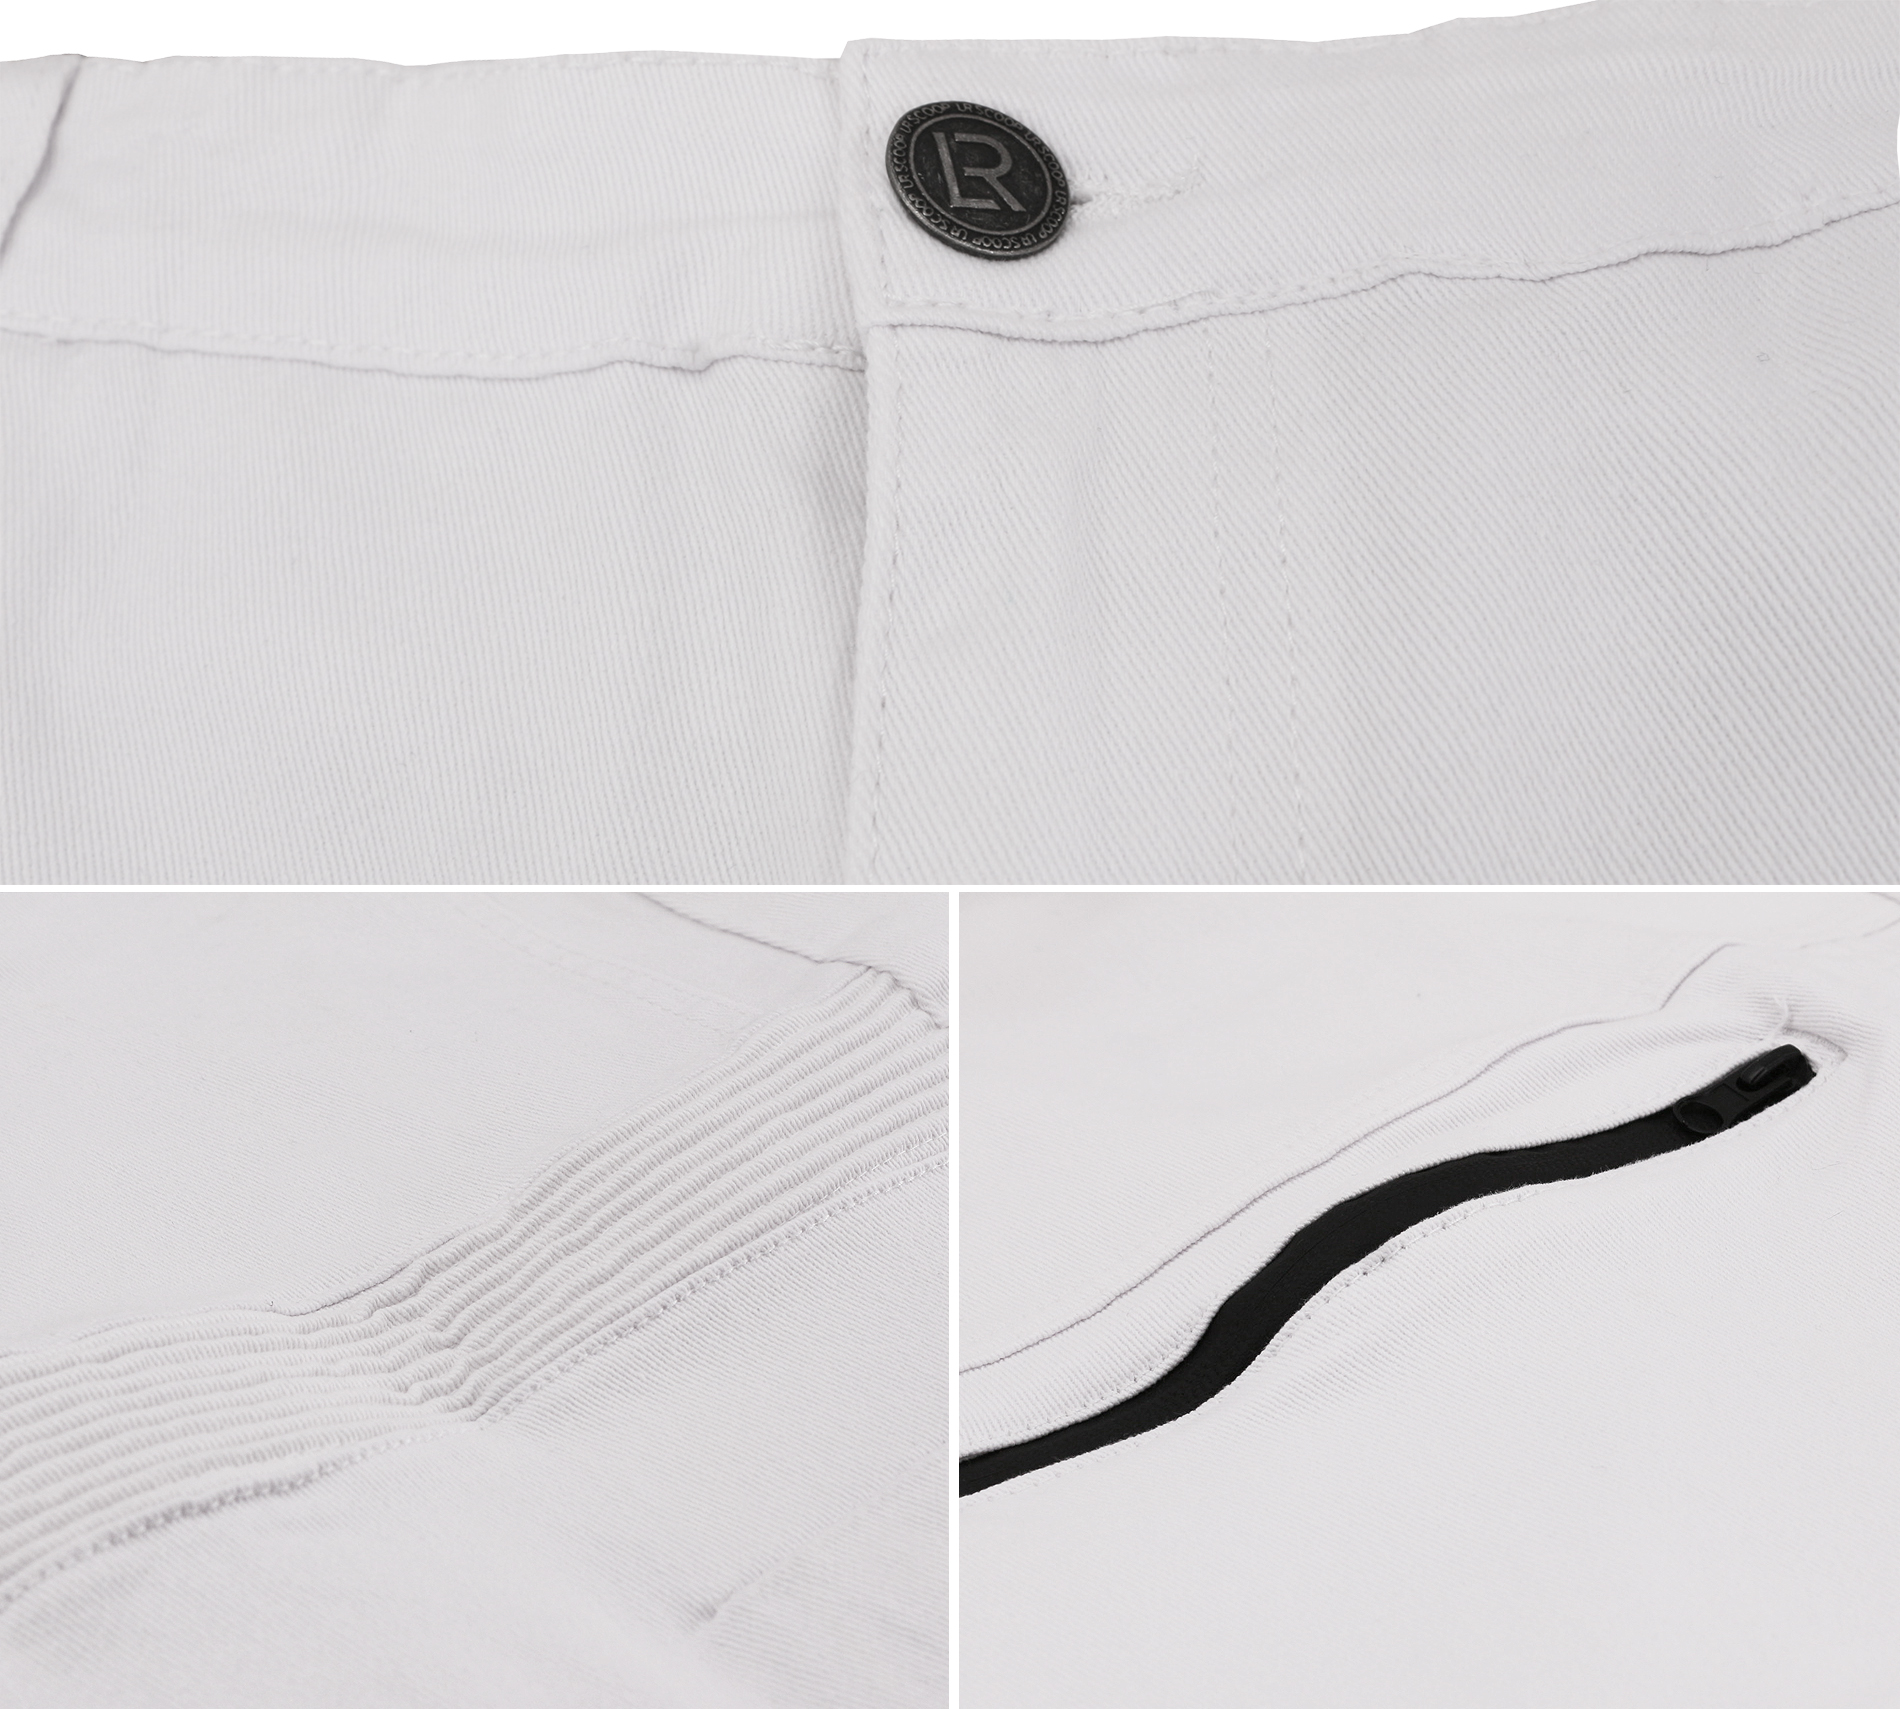 LR Scoop Men's Casual Stretch Denim Pants Moto Quilt Zipper Fashion Solid Jeans (White, 50x32) - image 3 of 3